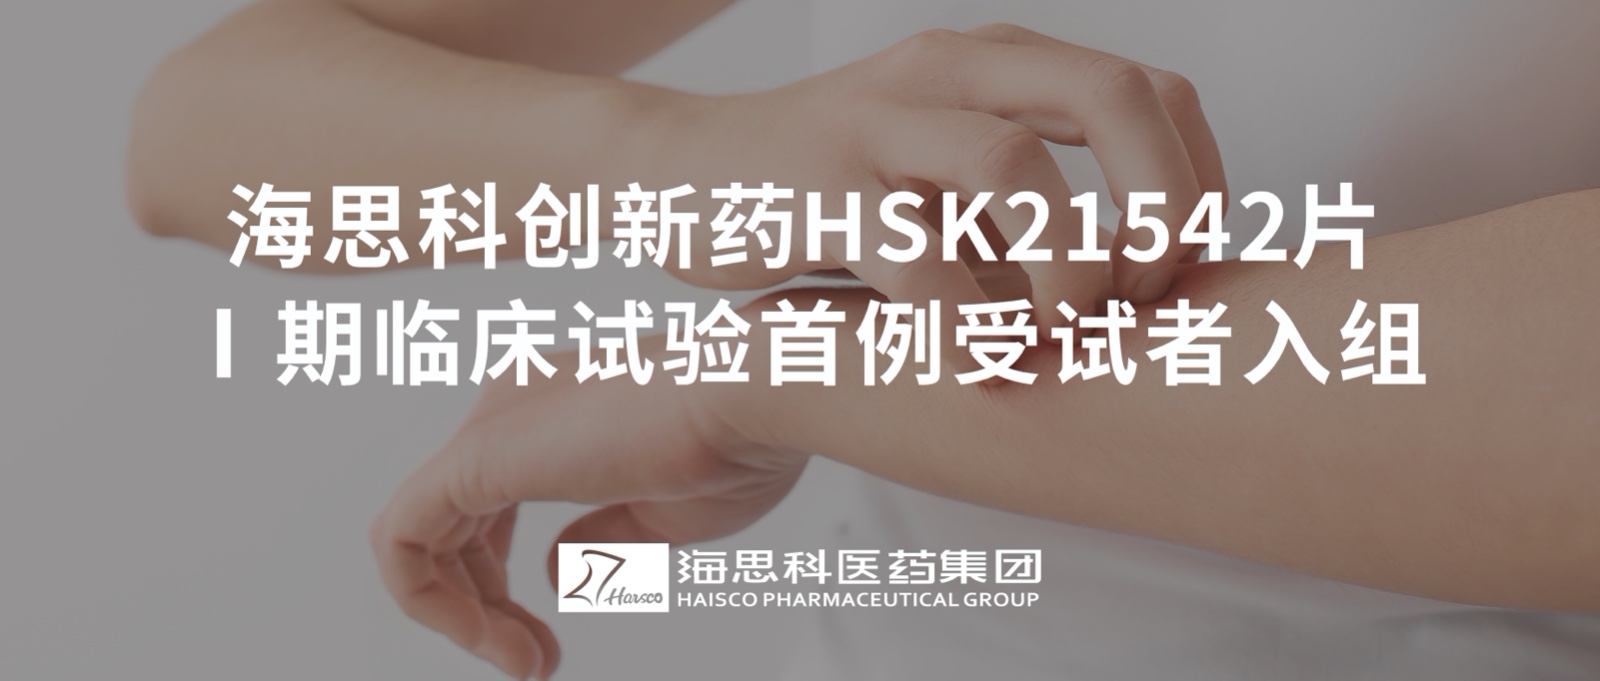 hjc黄金城创新药HSK21542片Ⅰ期临床试验首例受试者入组